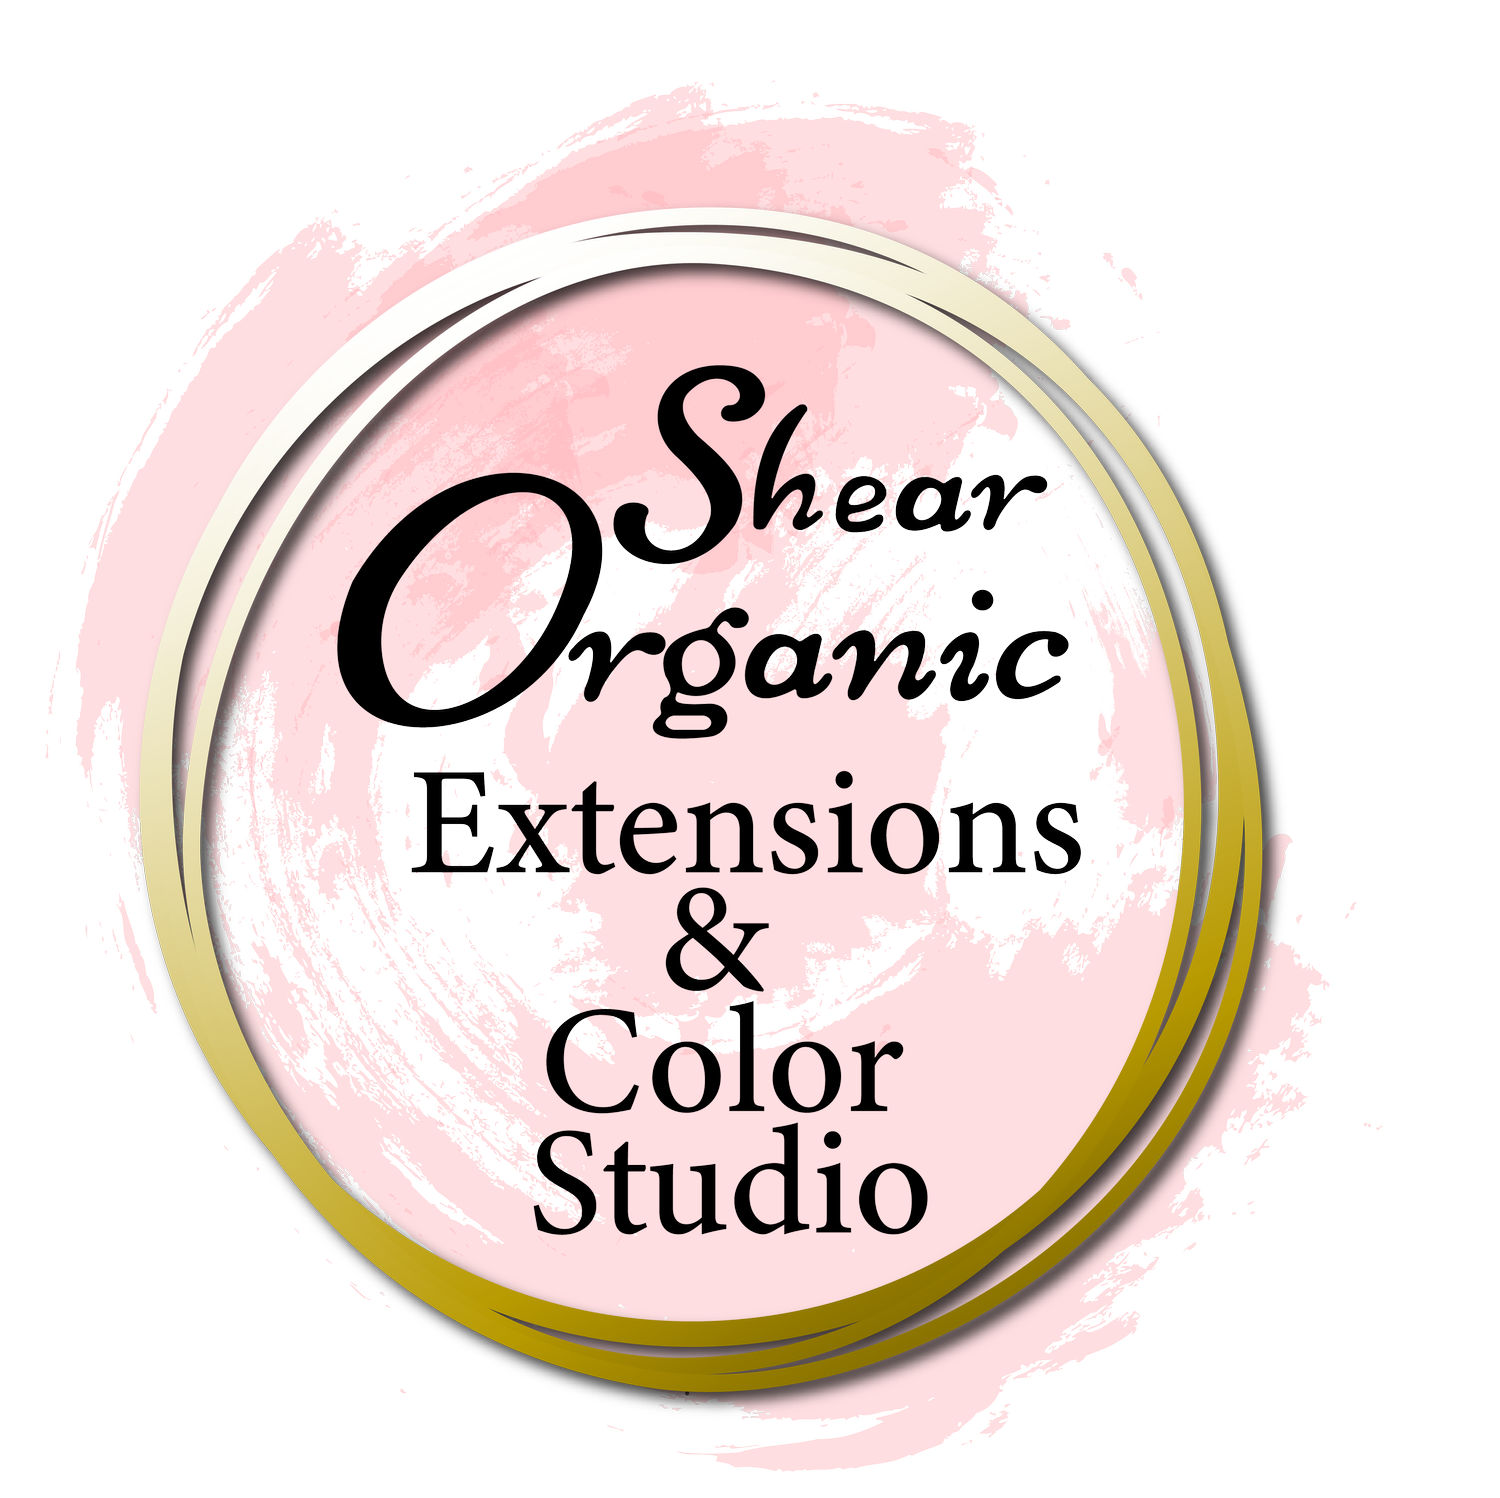 Shear Organic Extensions & Color Studio